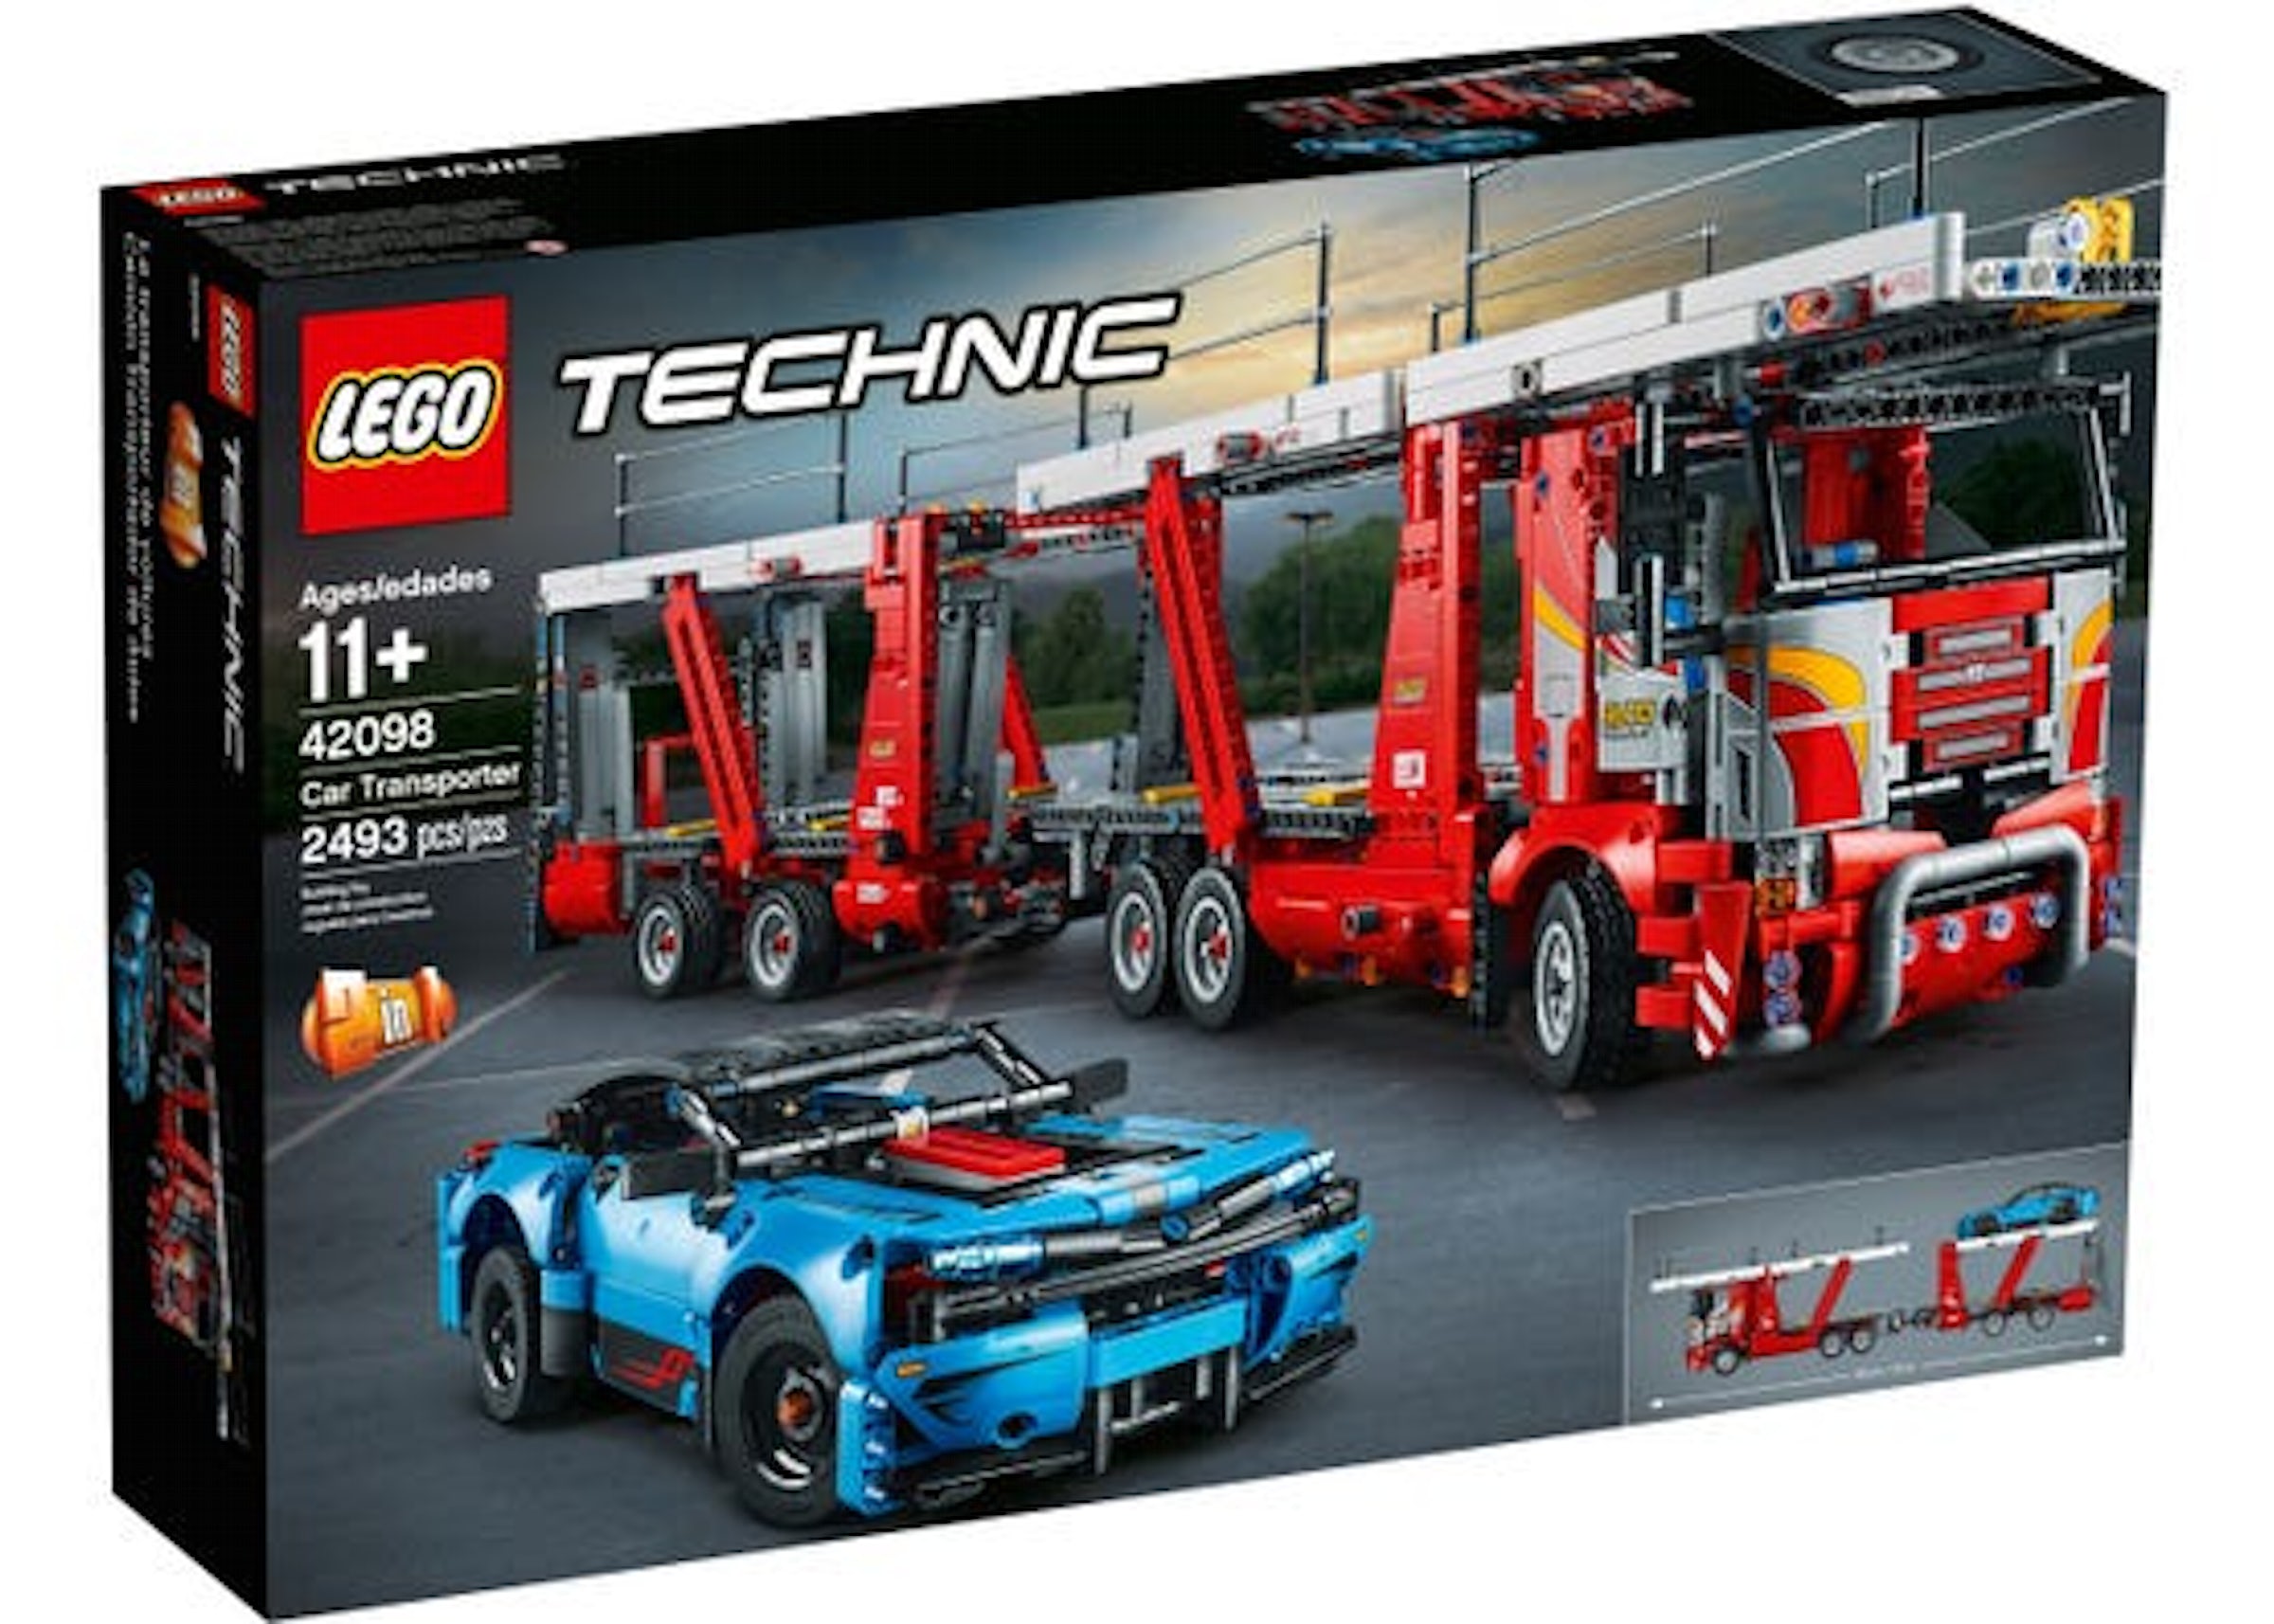 LEGO Technic Car Transporter Set 42098 - US